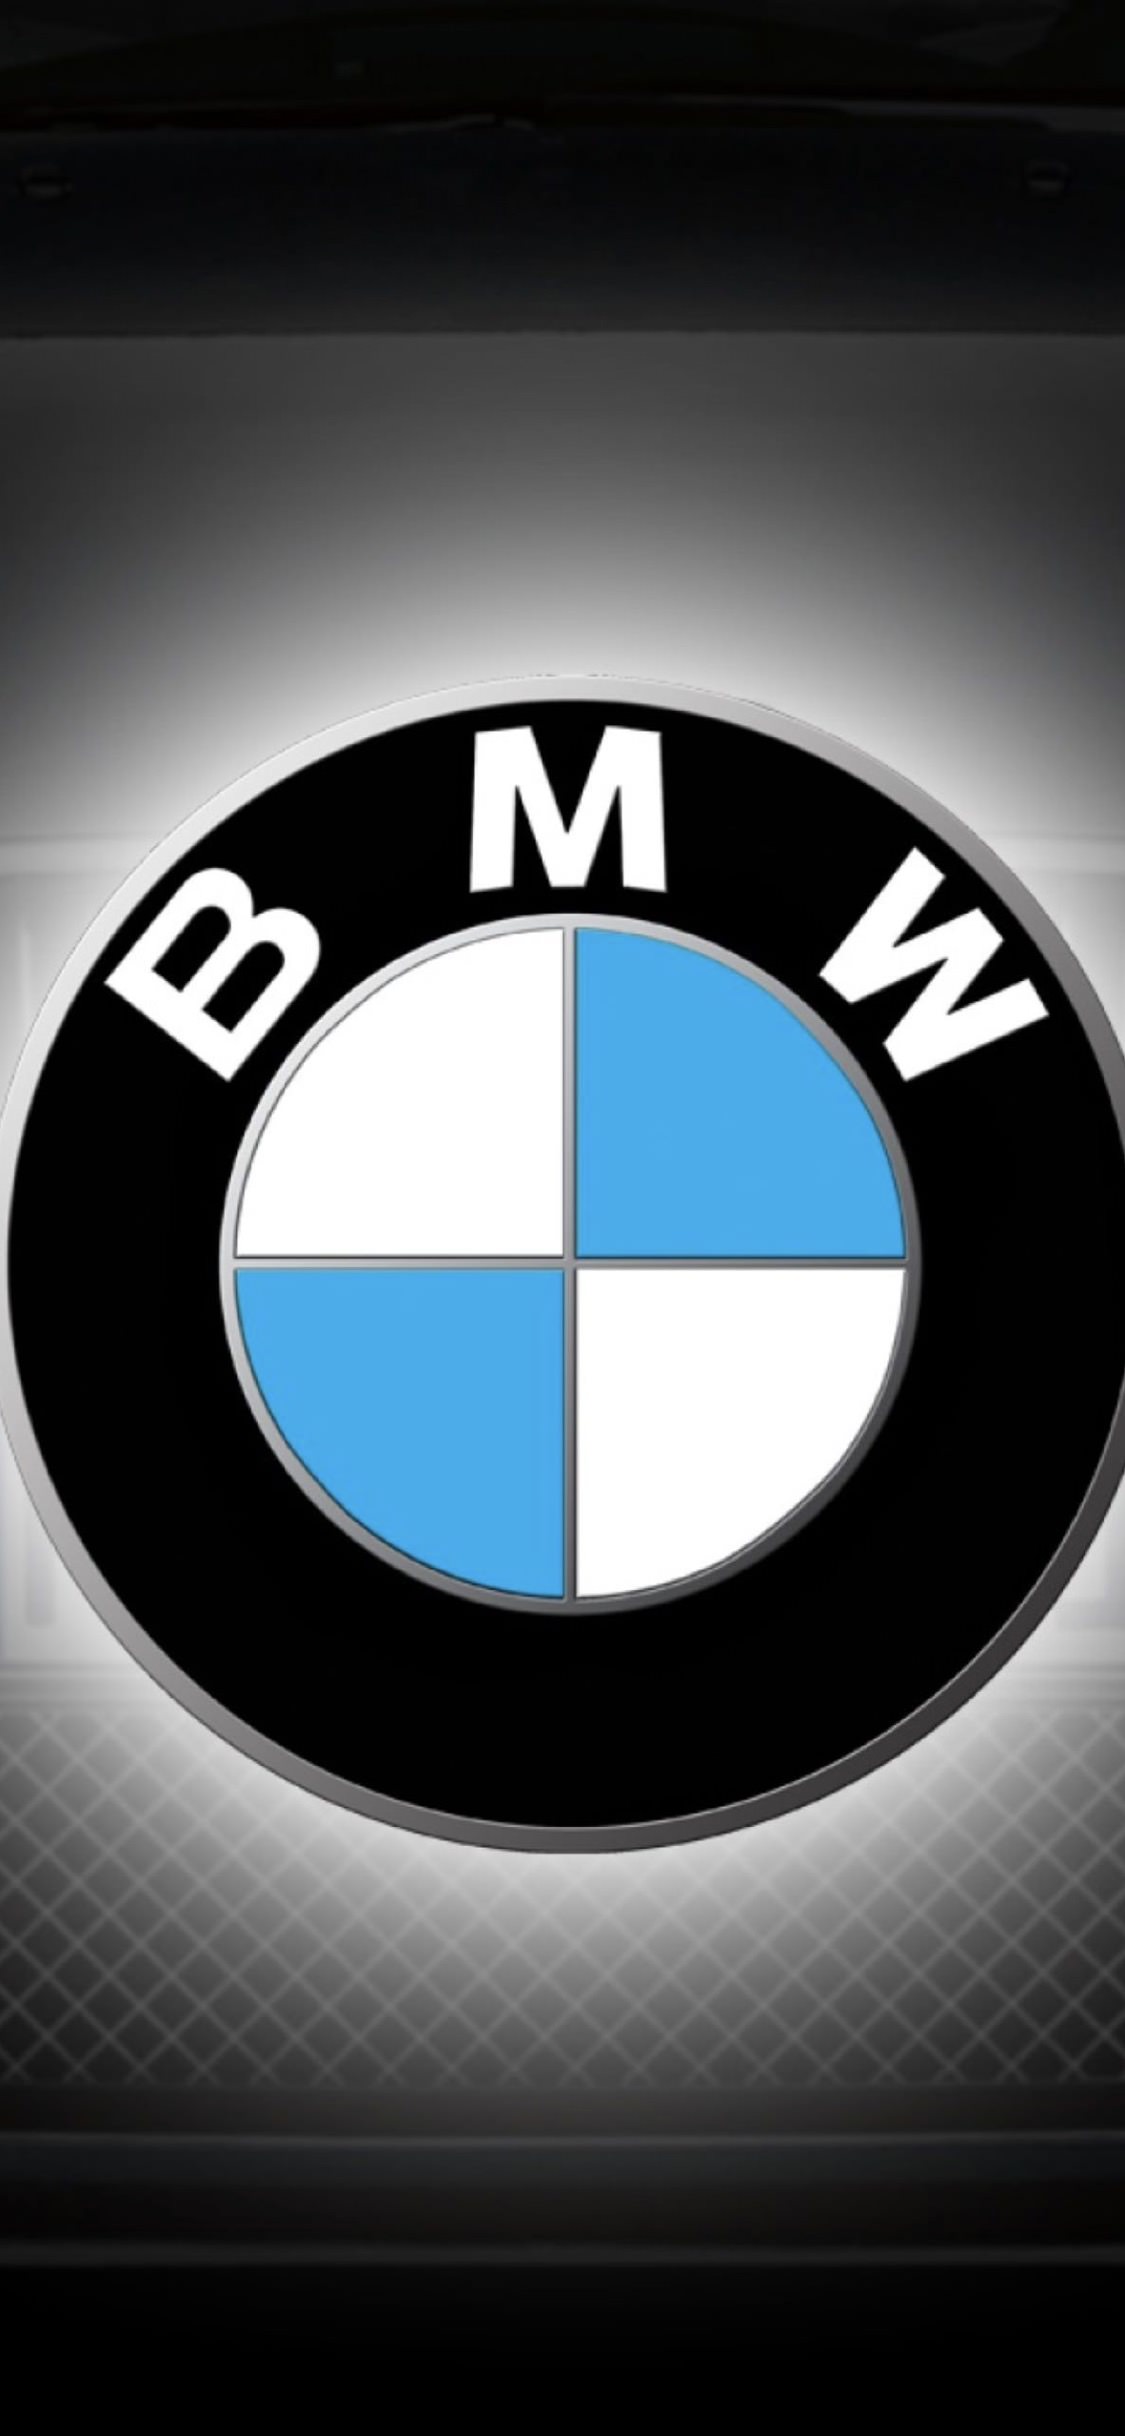 Bmw Logo Wallpapers